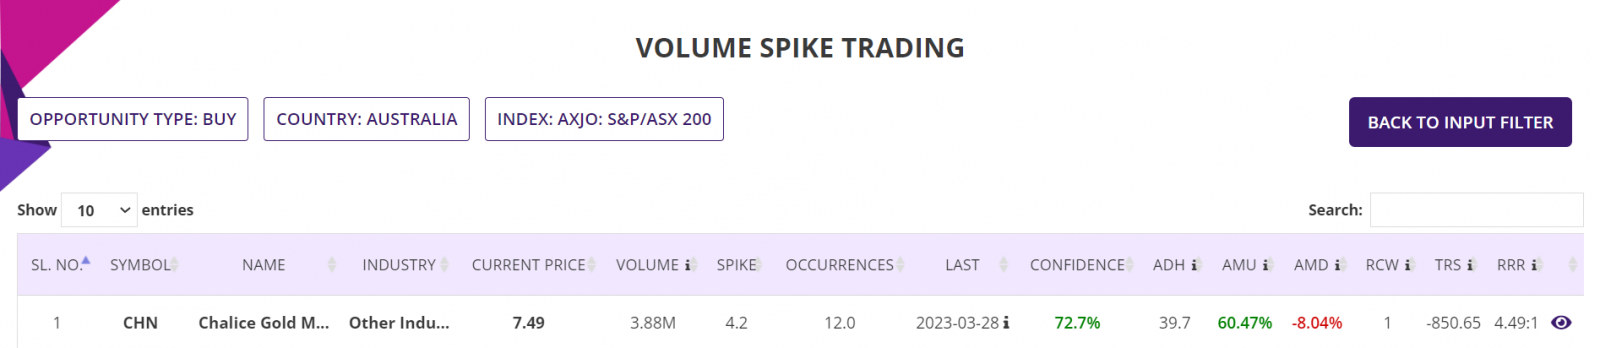 Volume spike trading strategy, summary report, ASX200 Stocks